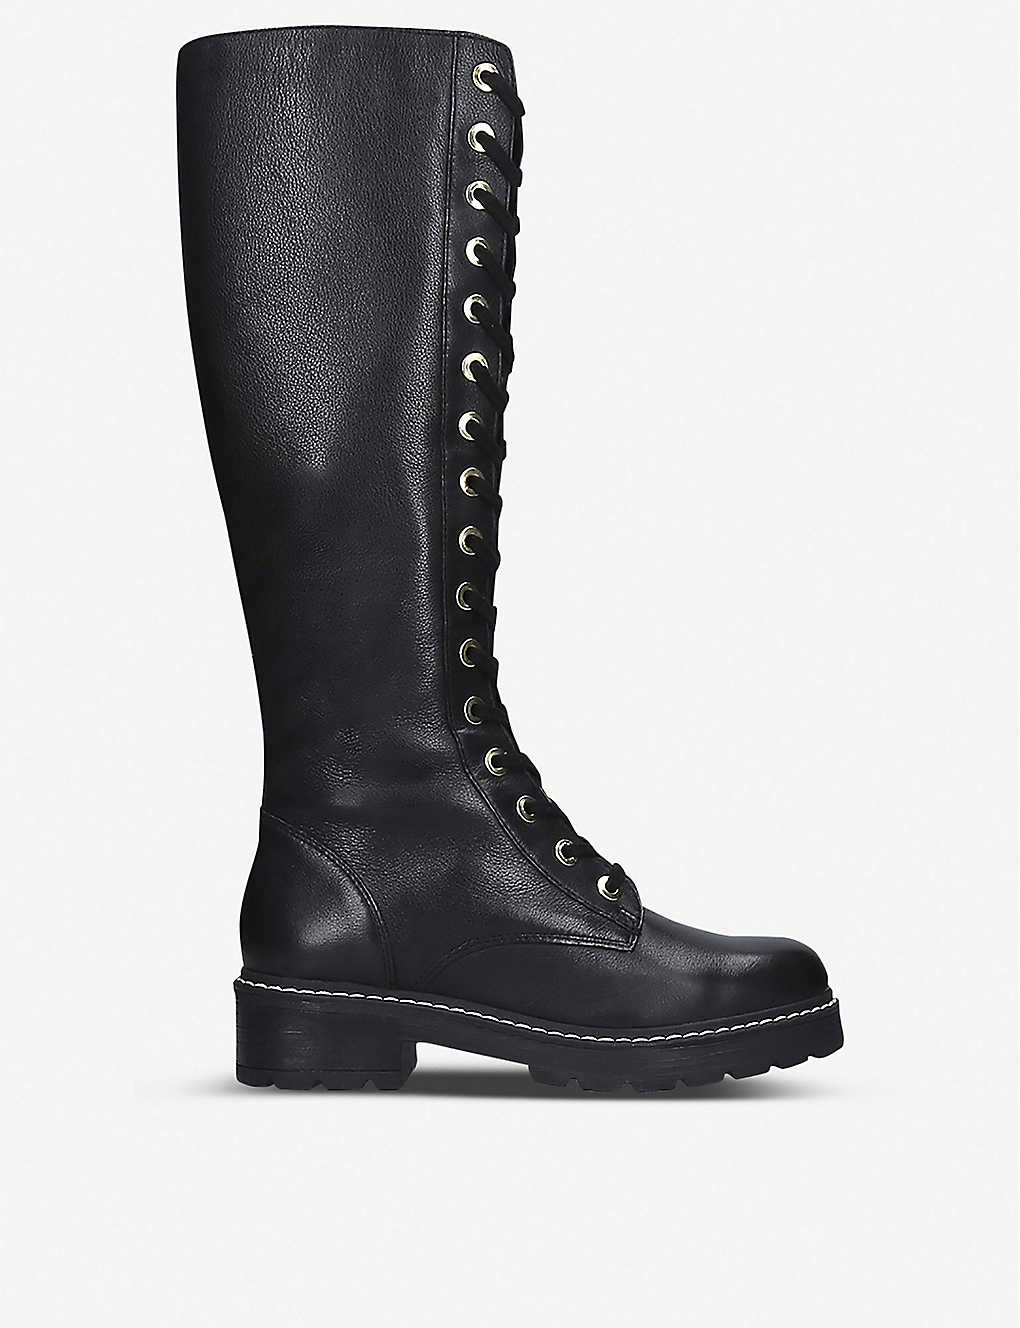 CARVELA - Social knee-high lace boots | Selfridges.com